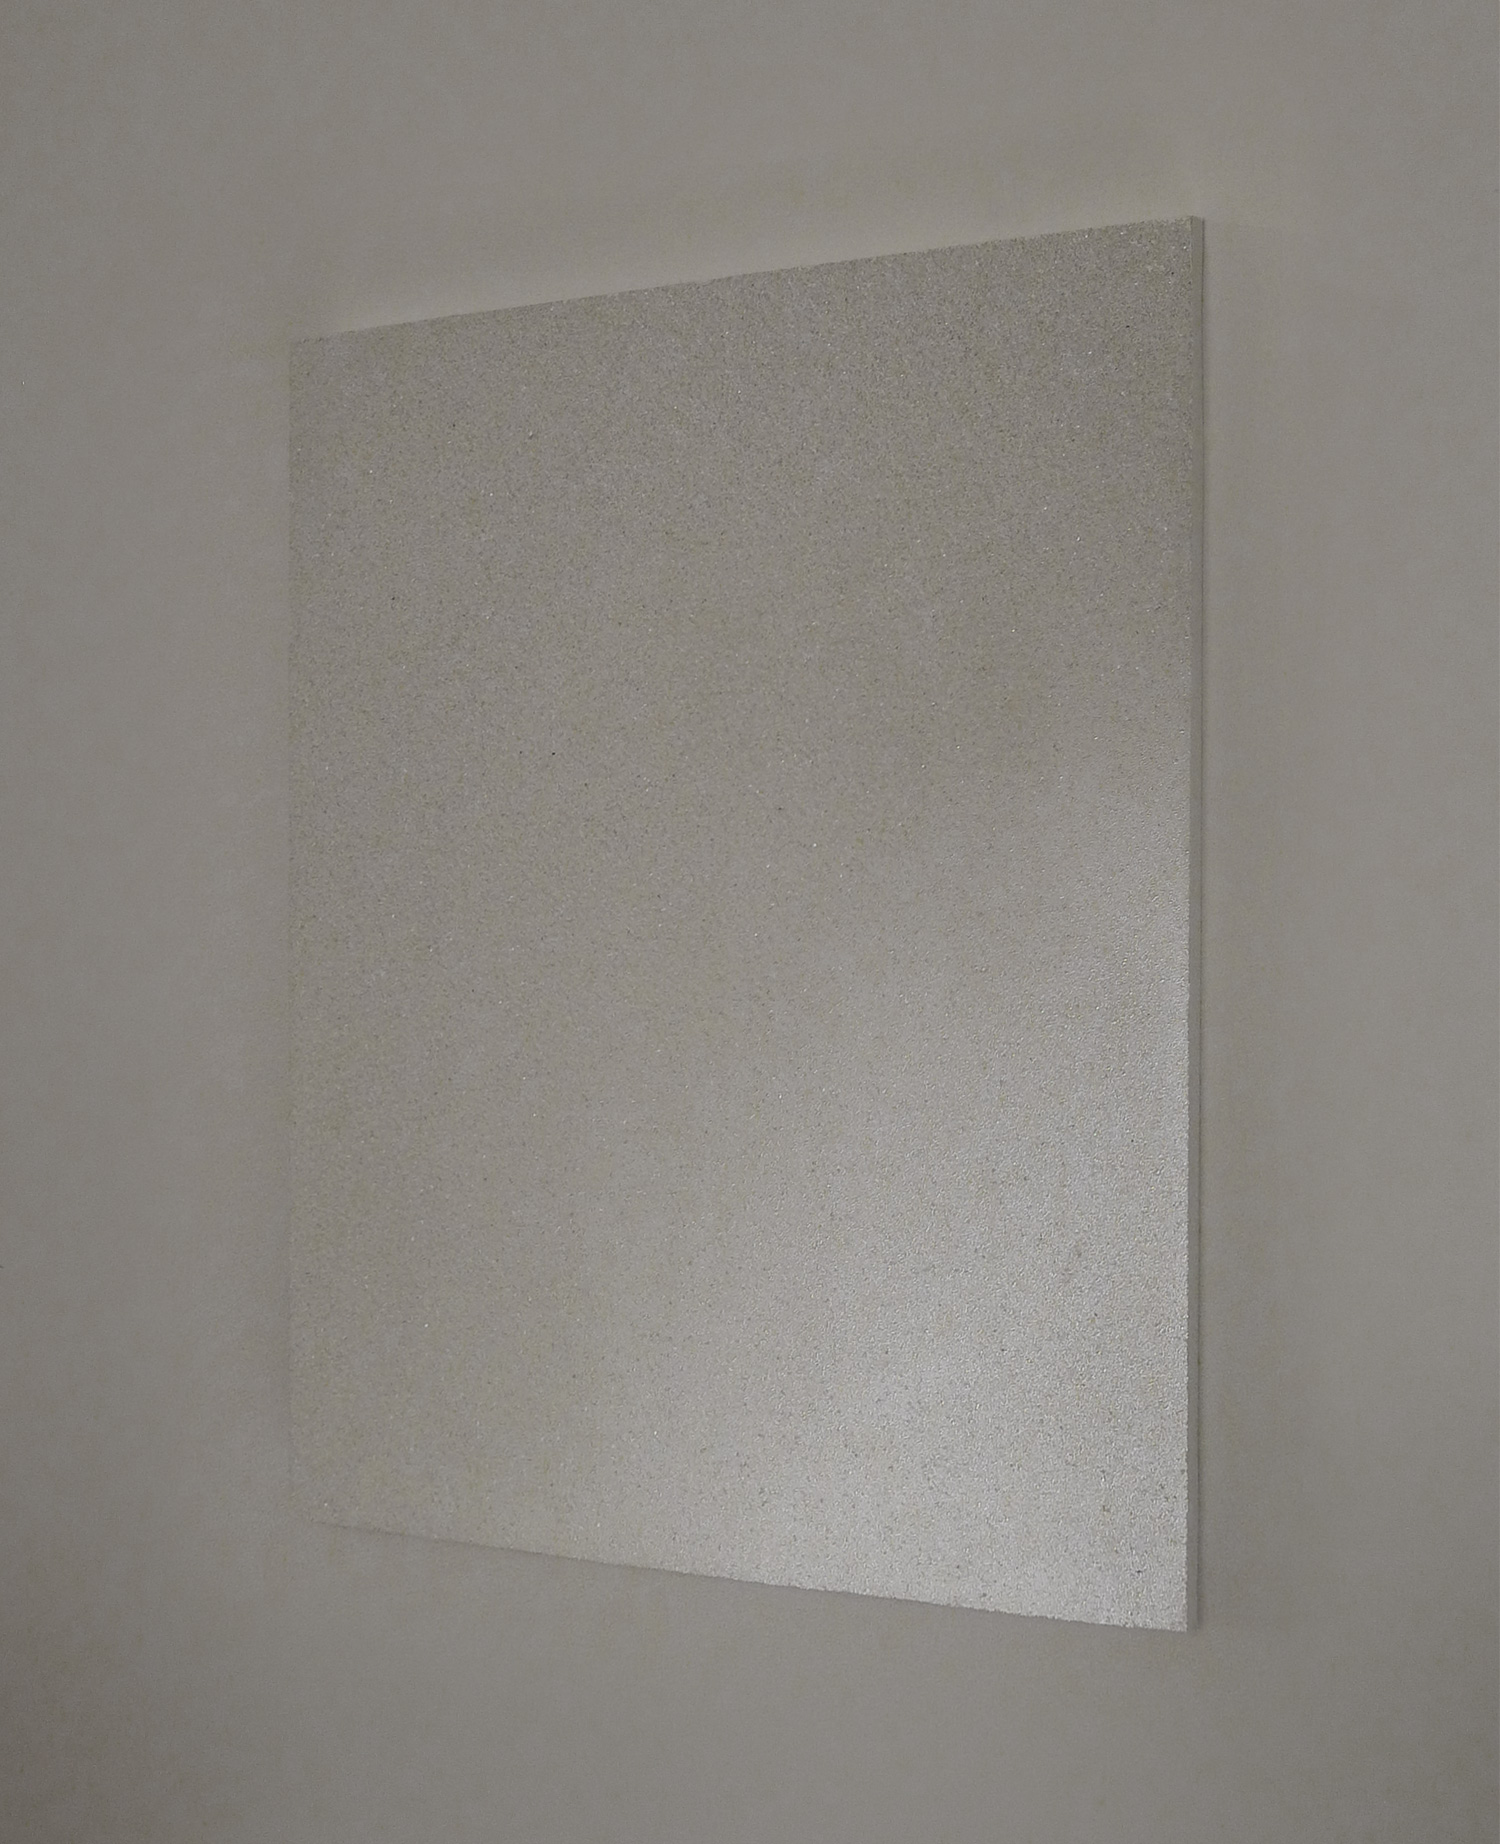 White-glass-painting-2-Buckley-72dpi-1500px-web.jpg